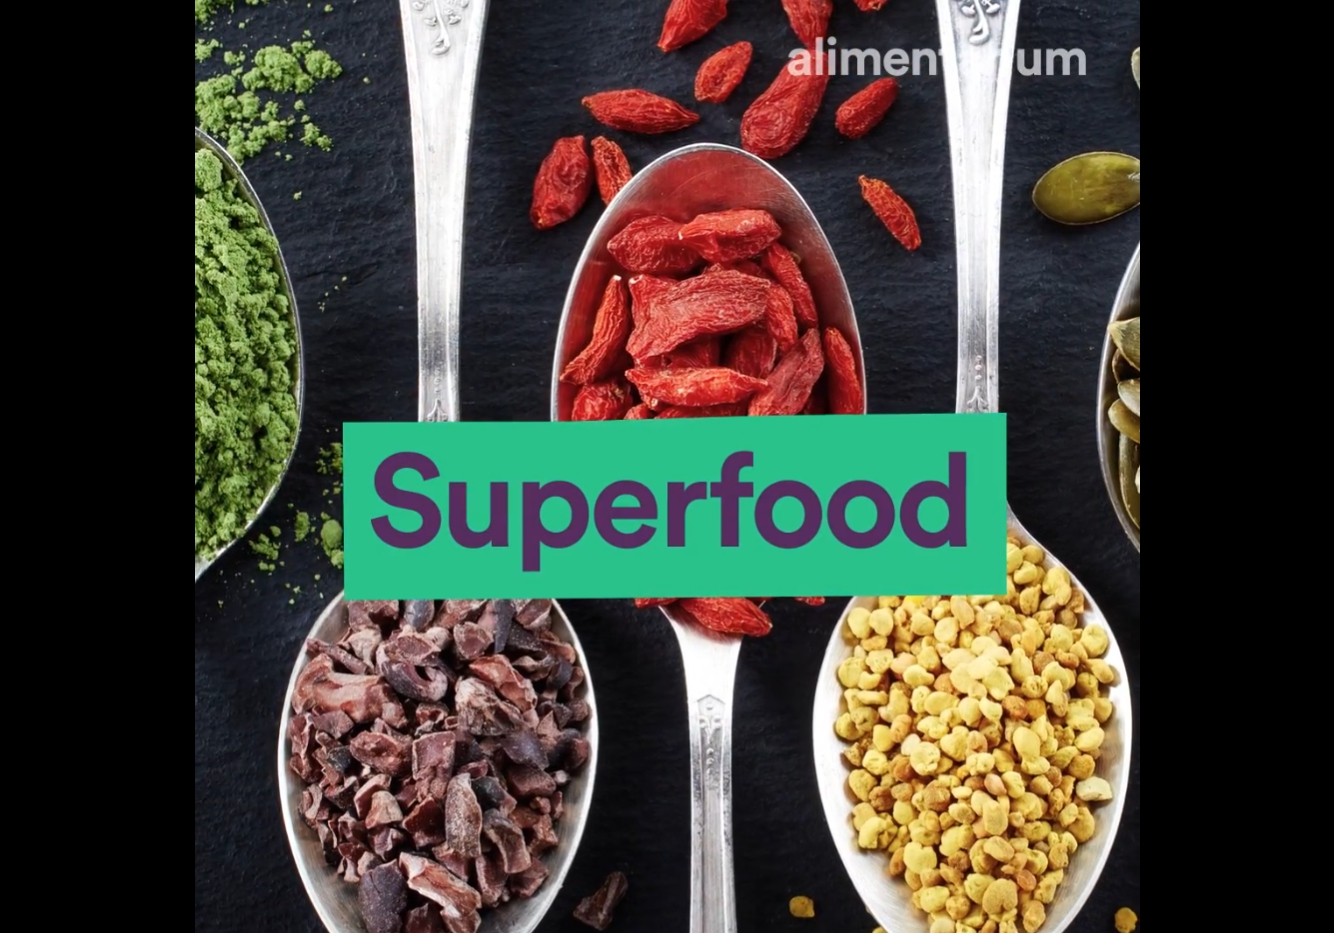 Superfood: An elixir of longevity or a marketing tool?